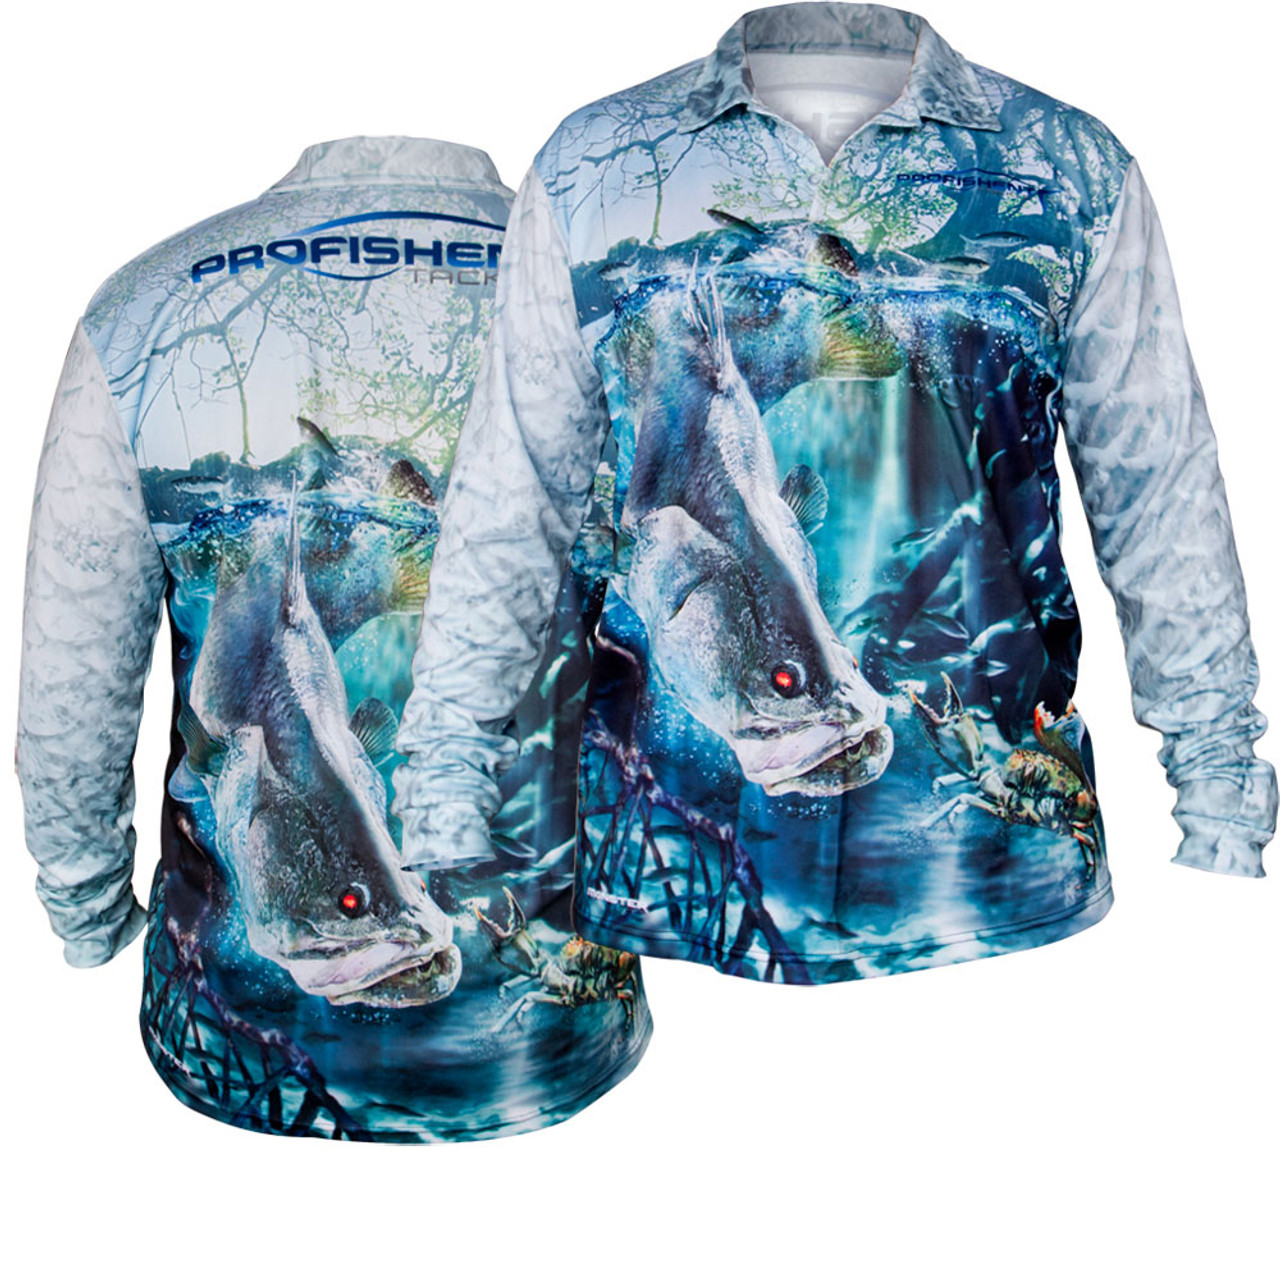 sublimation fishing jersey design